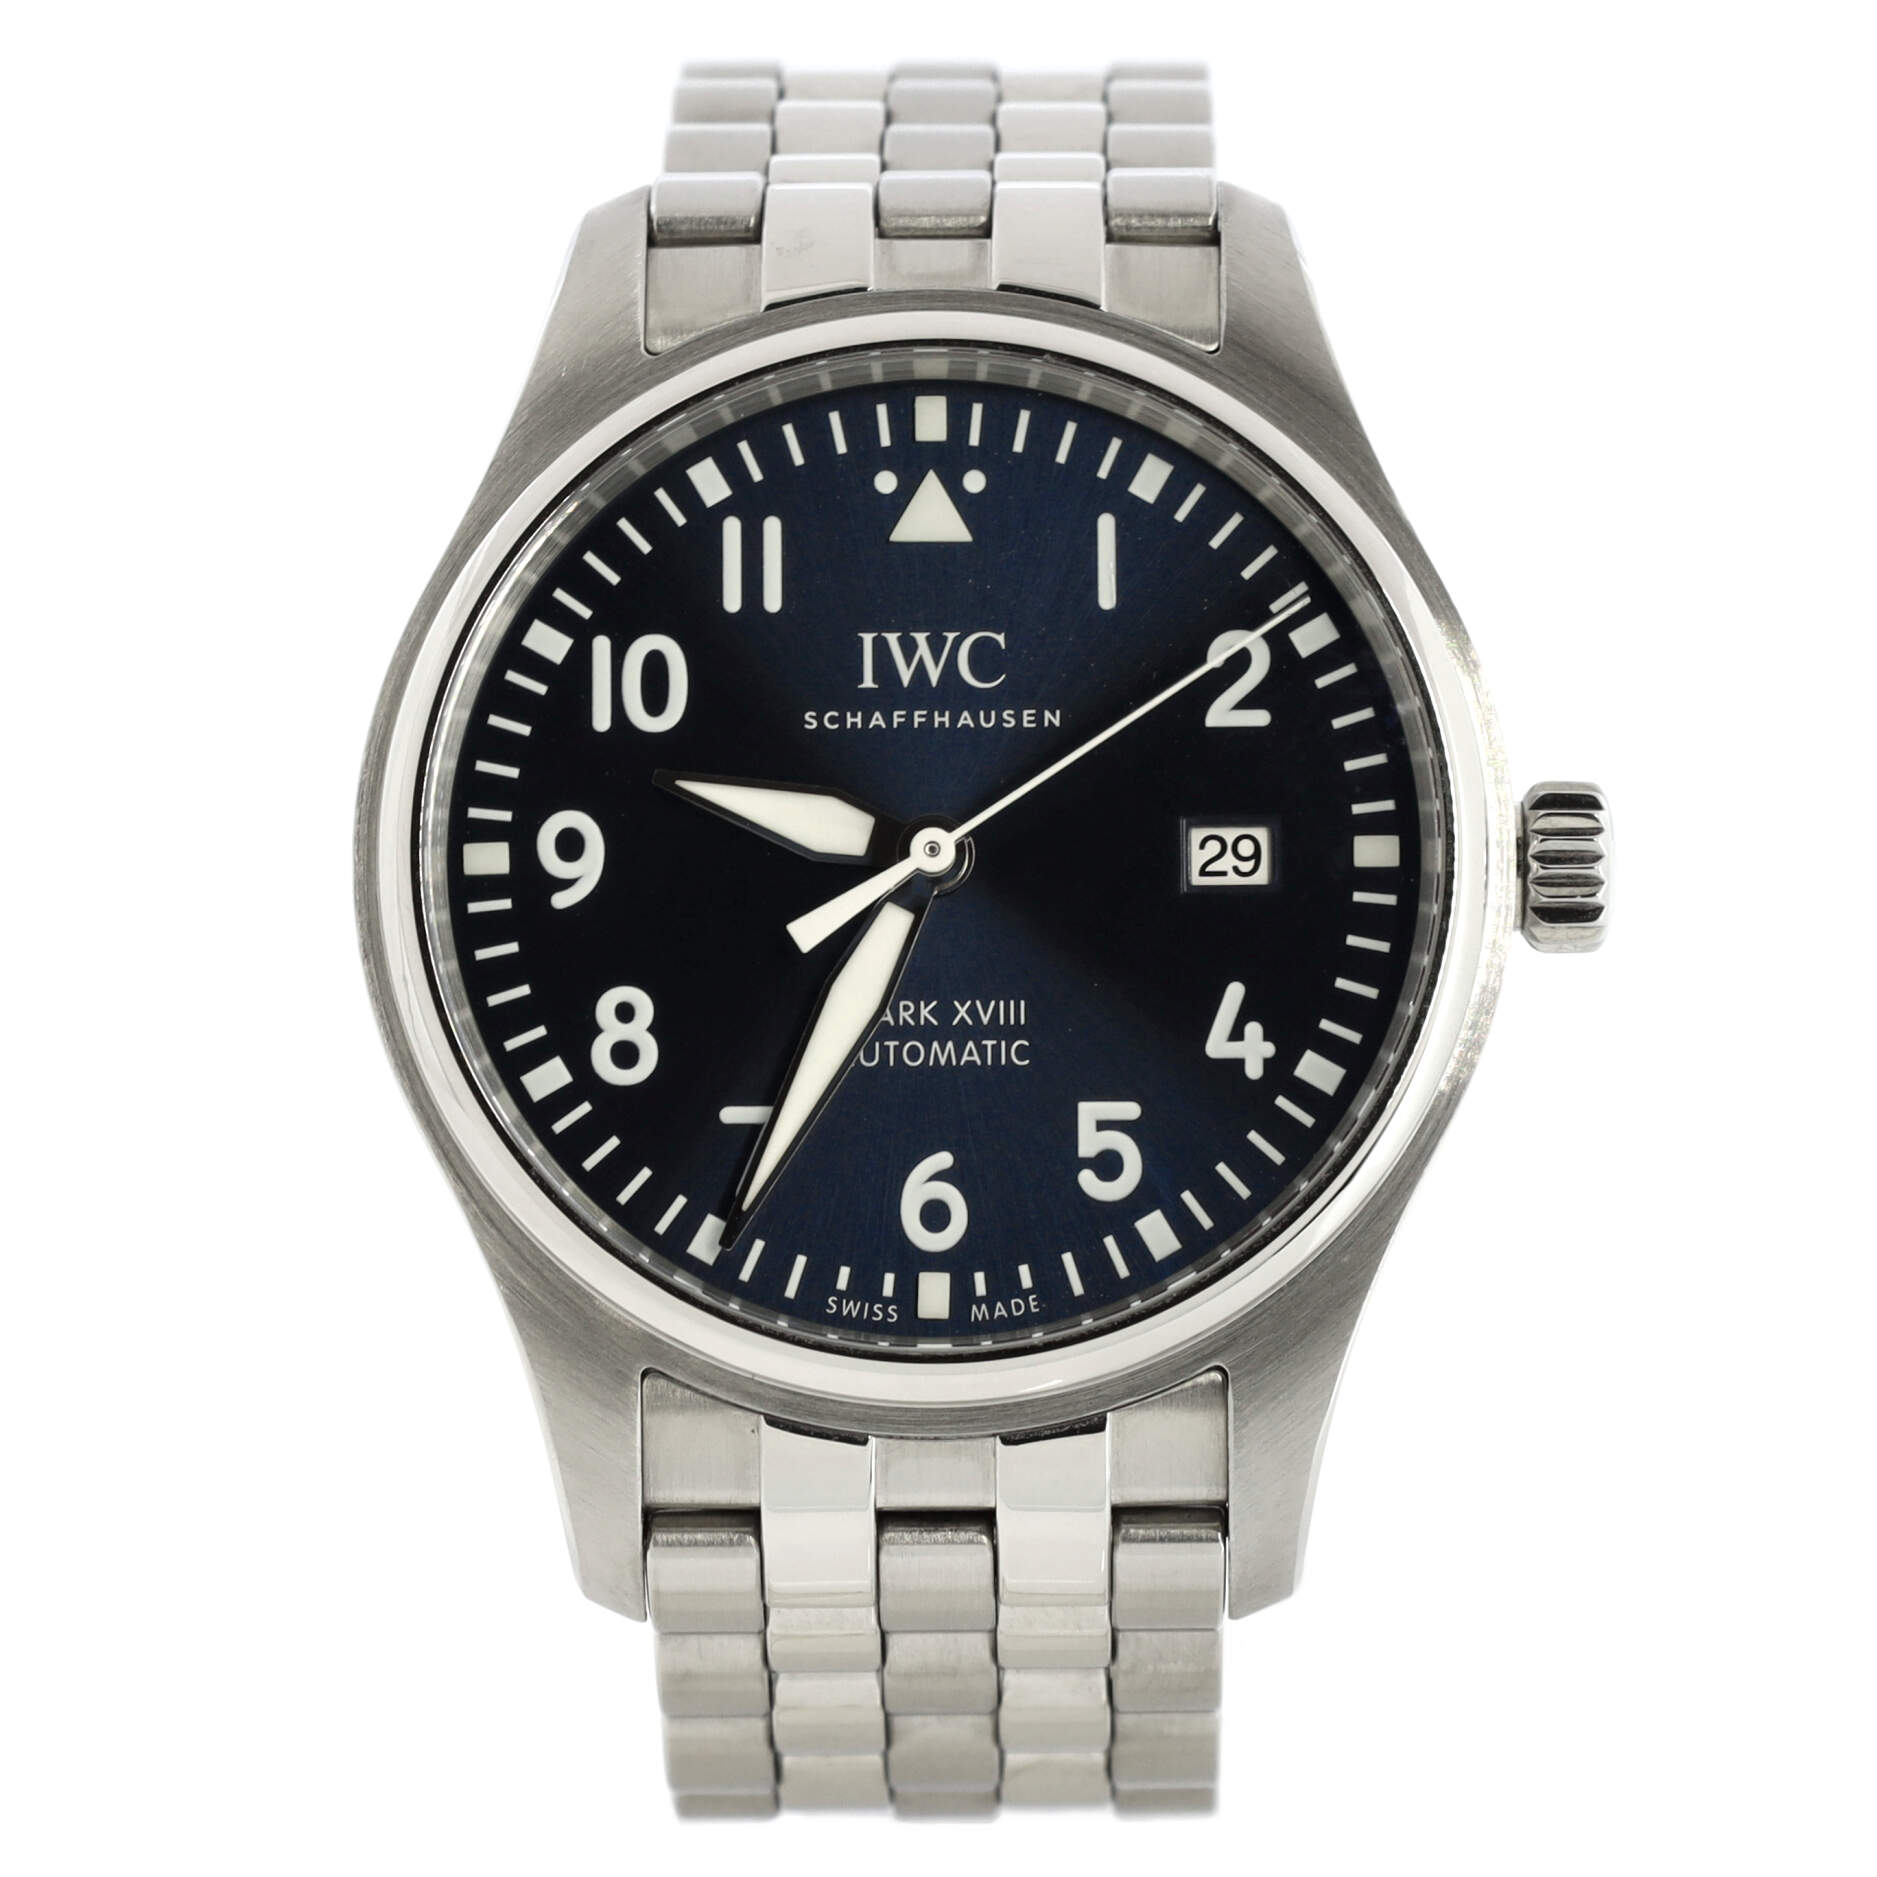 Pilot Le Petit Prince Mark XVIII Automatic Watch (IW327014)